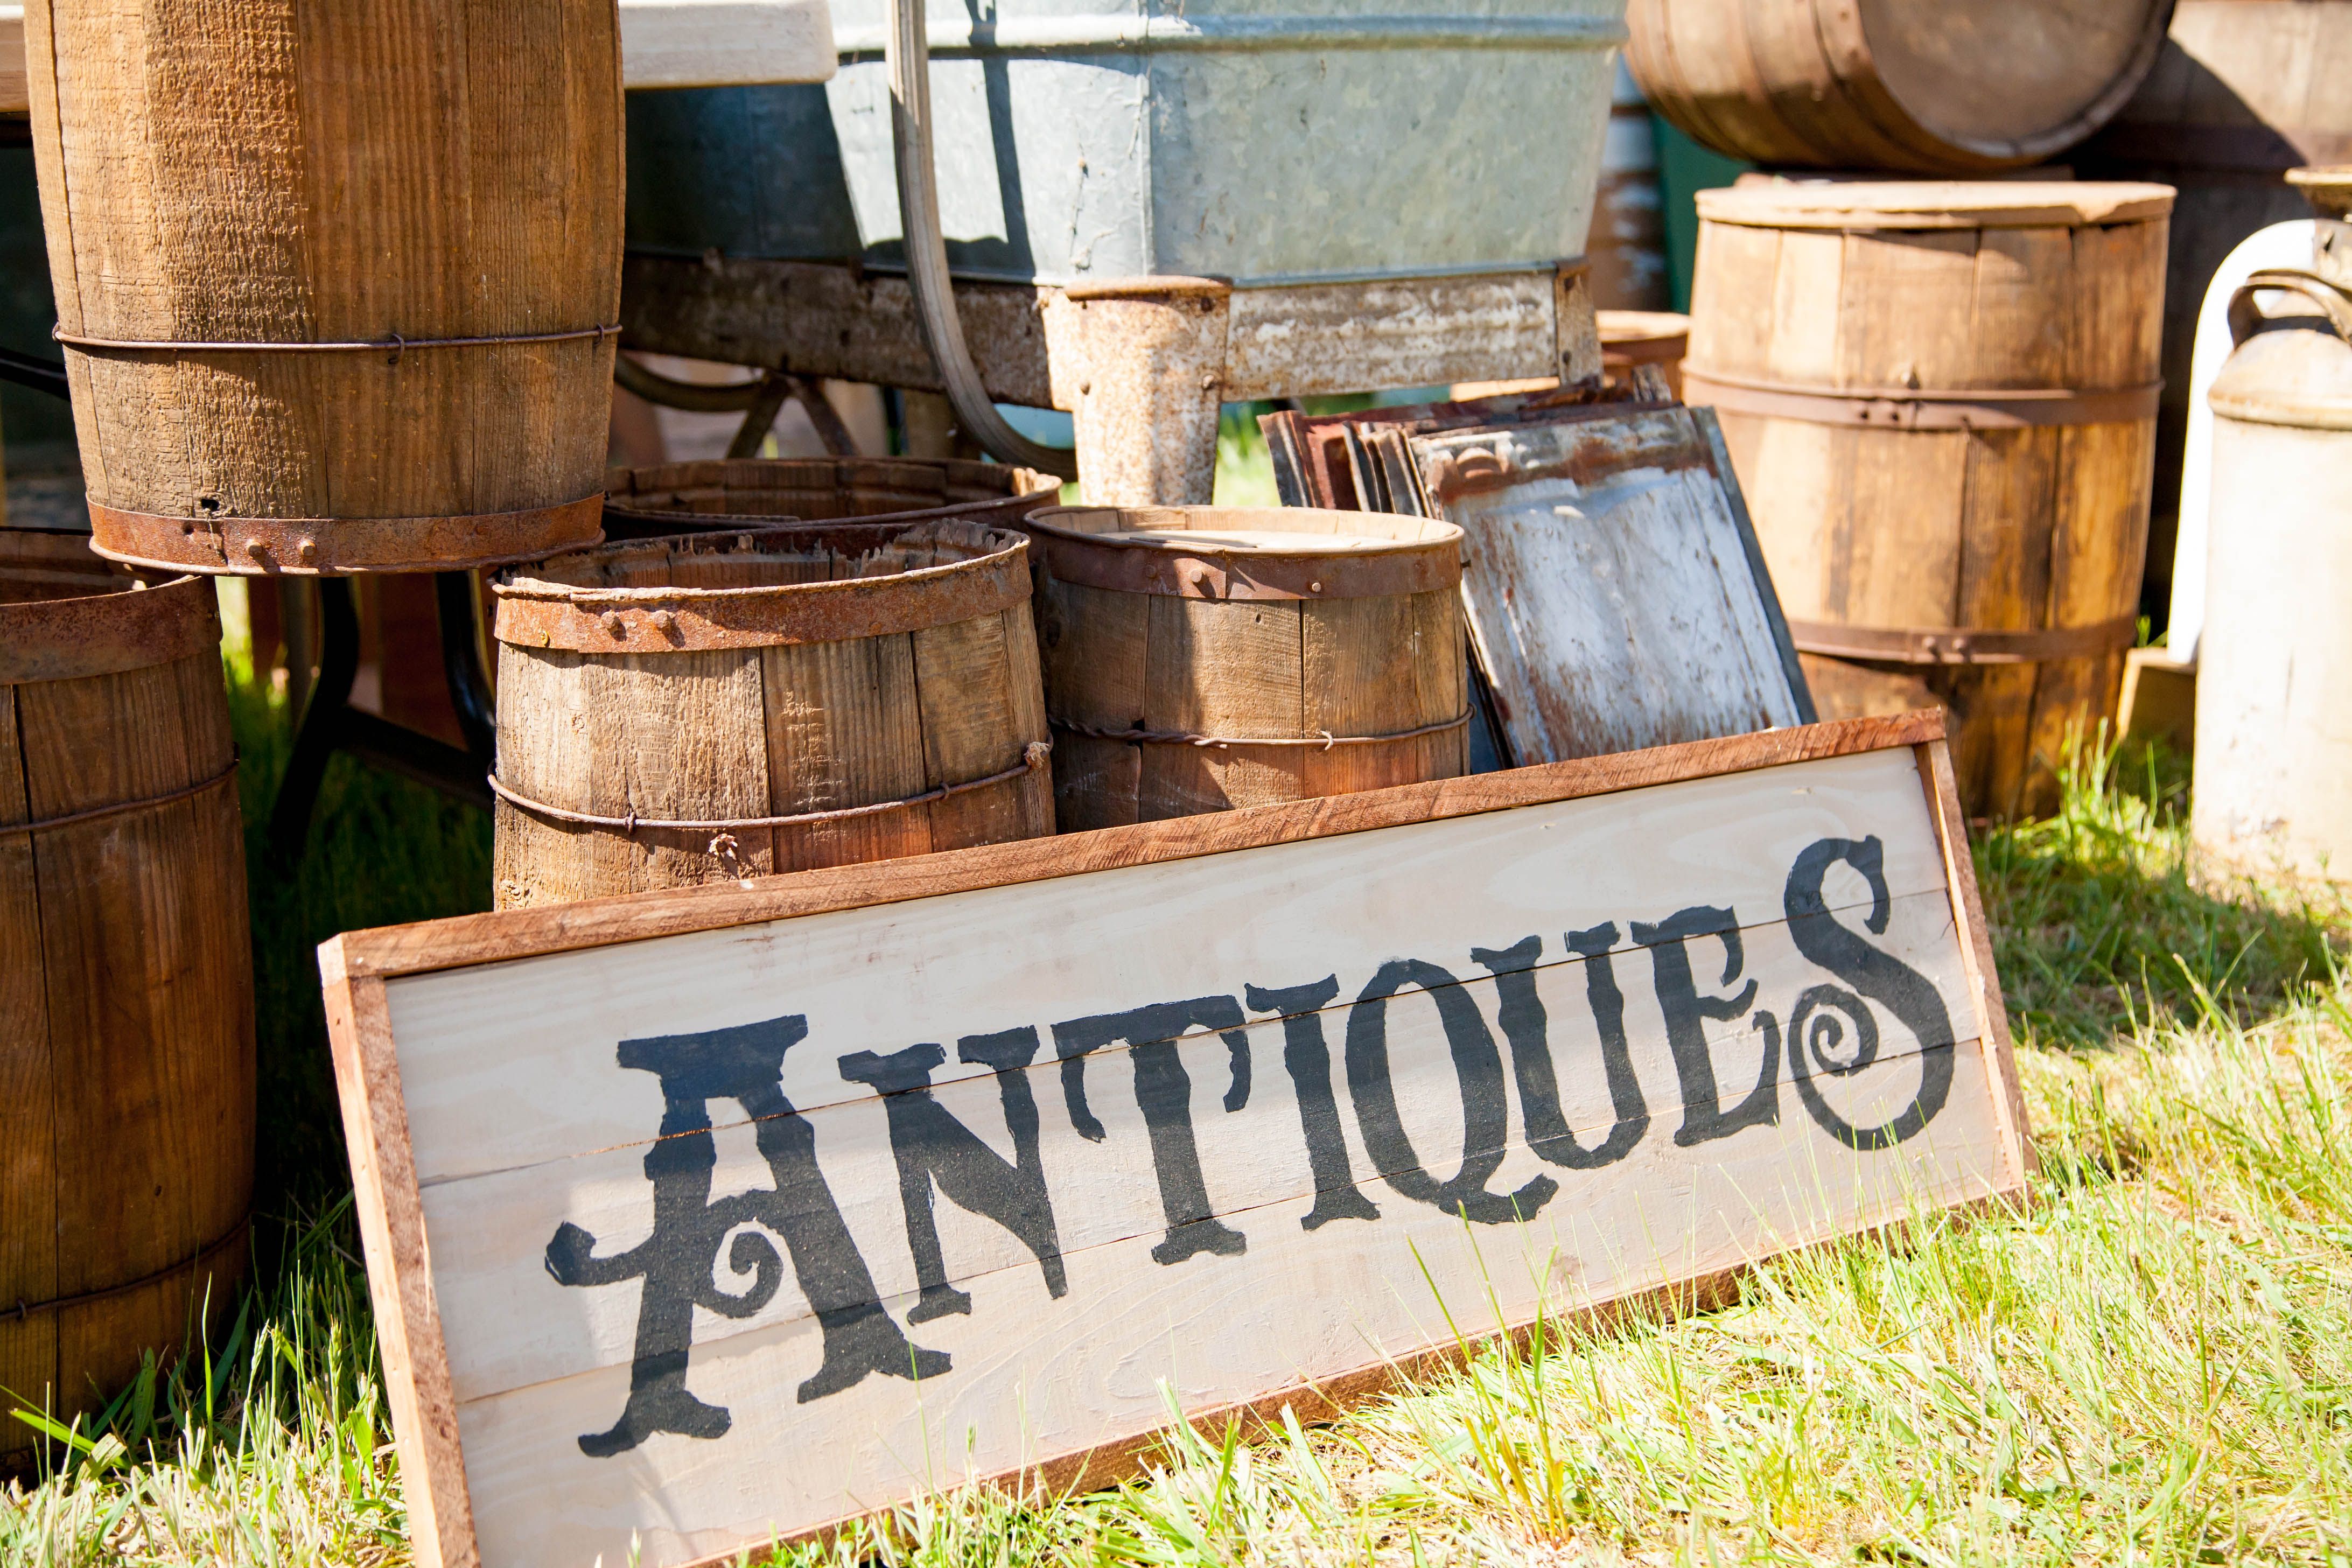 40 Antiques Worth Money - Antique Dishes, Furniture, and Antique